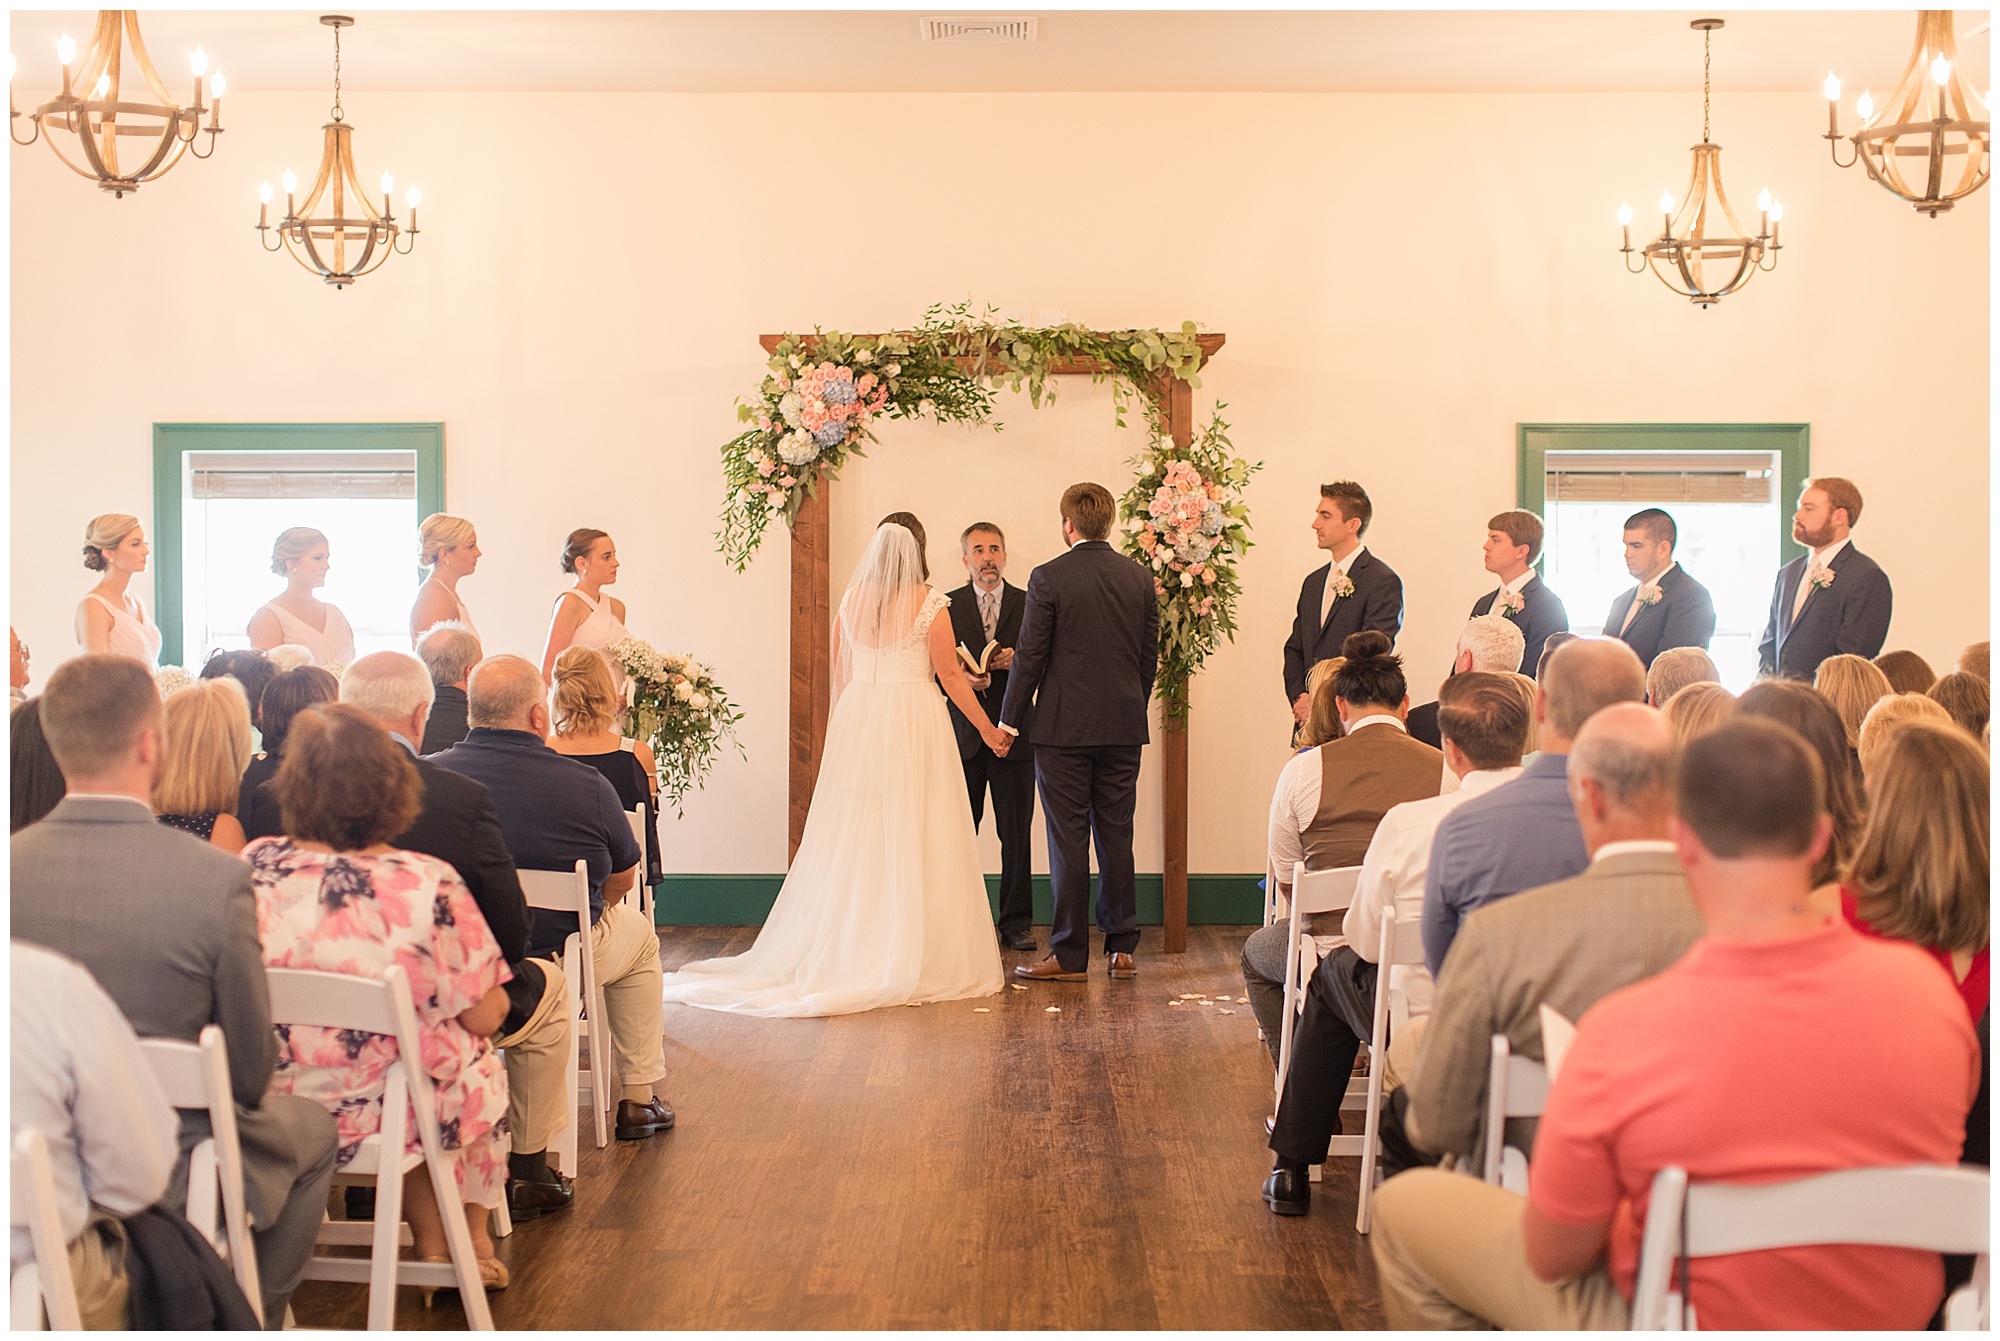 Hampton Roads Wedding Photographer,Kelley Stinson Photography,Virginia Beach Photographer,Culpepper Barn Wedding,